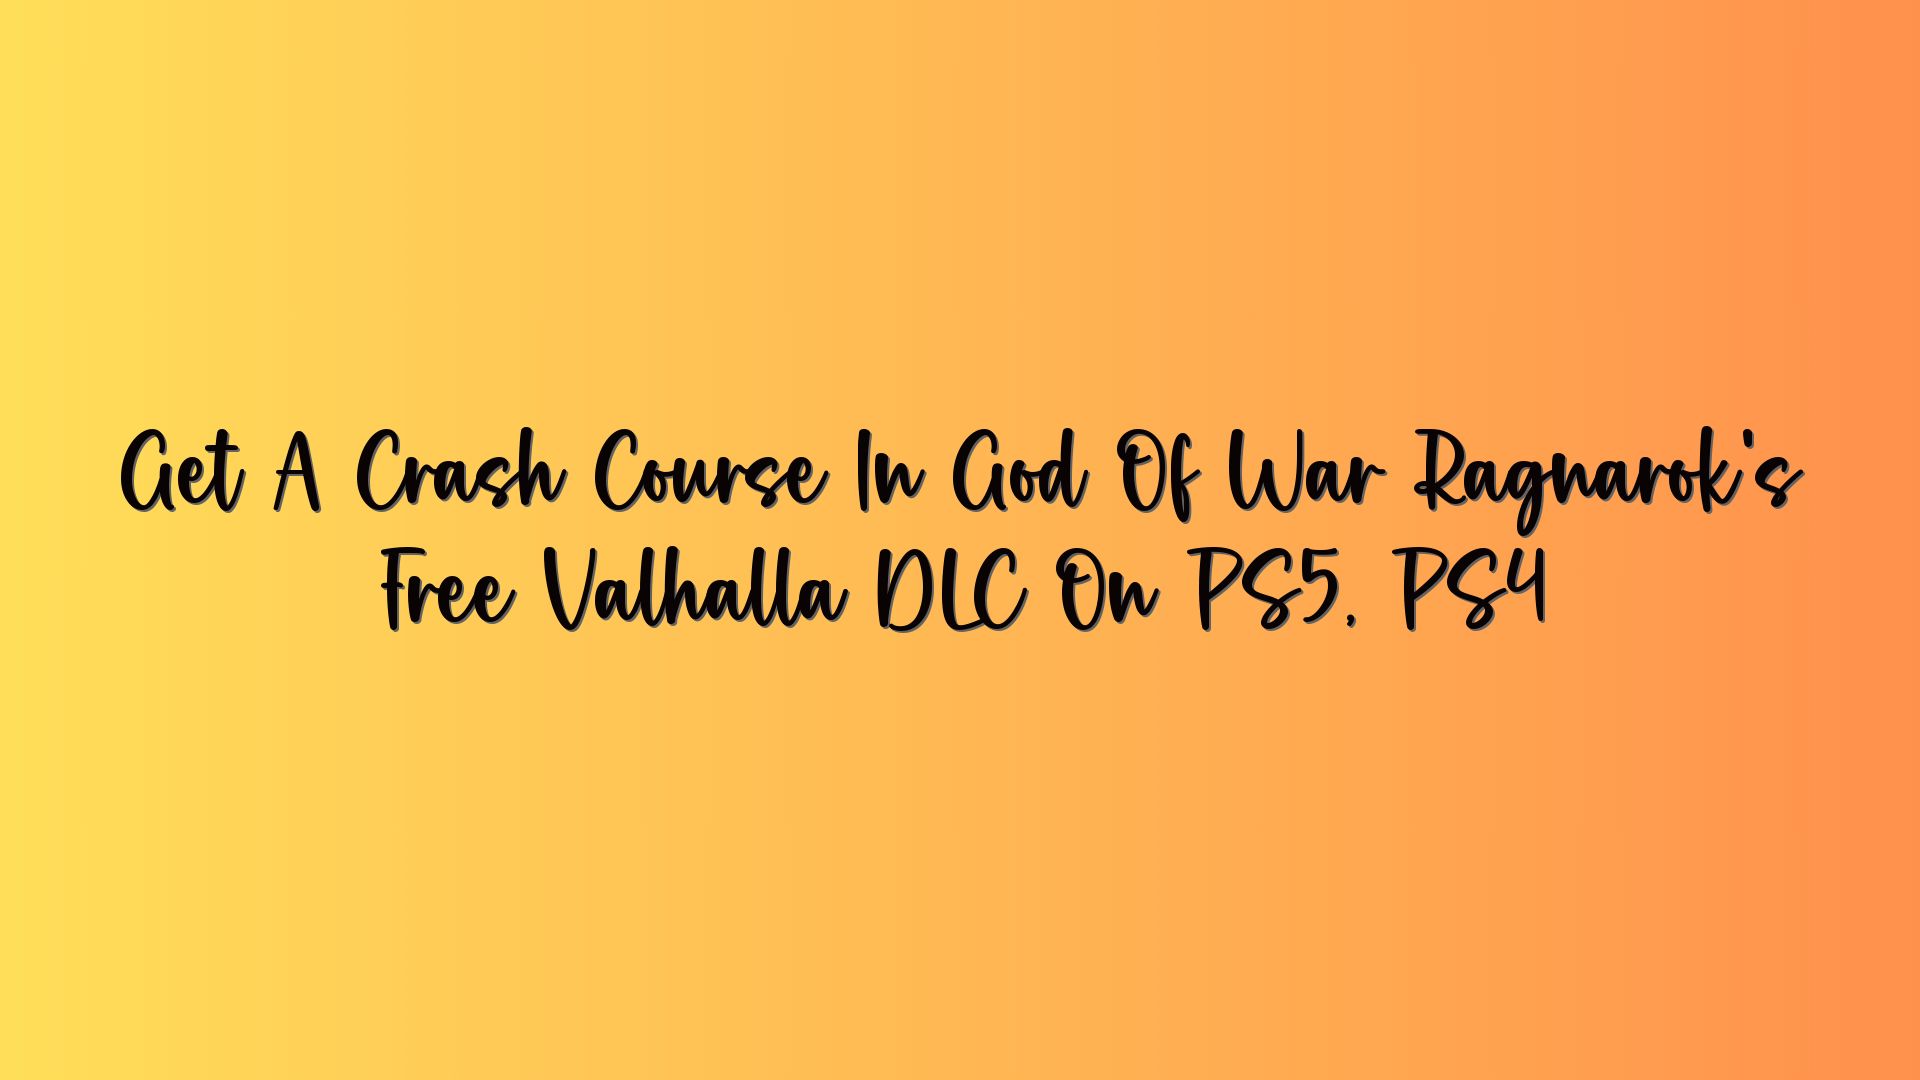 Get A Crash Course In God Of War Ragnarok’s Free Valhalla DLC On PS5, PS4